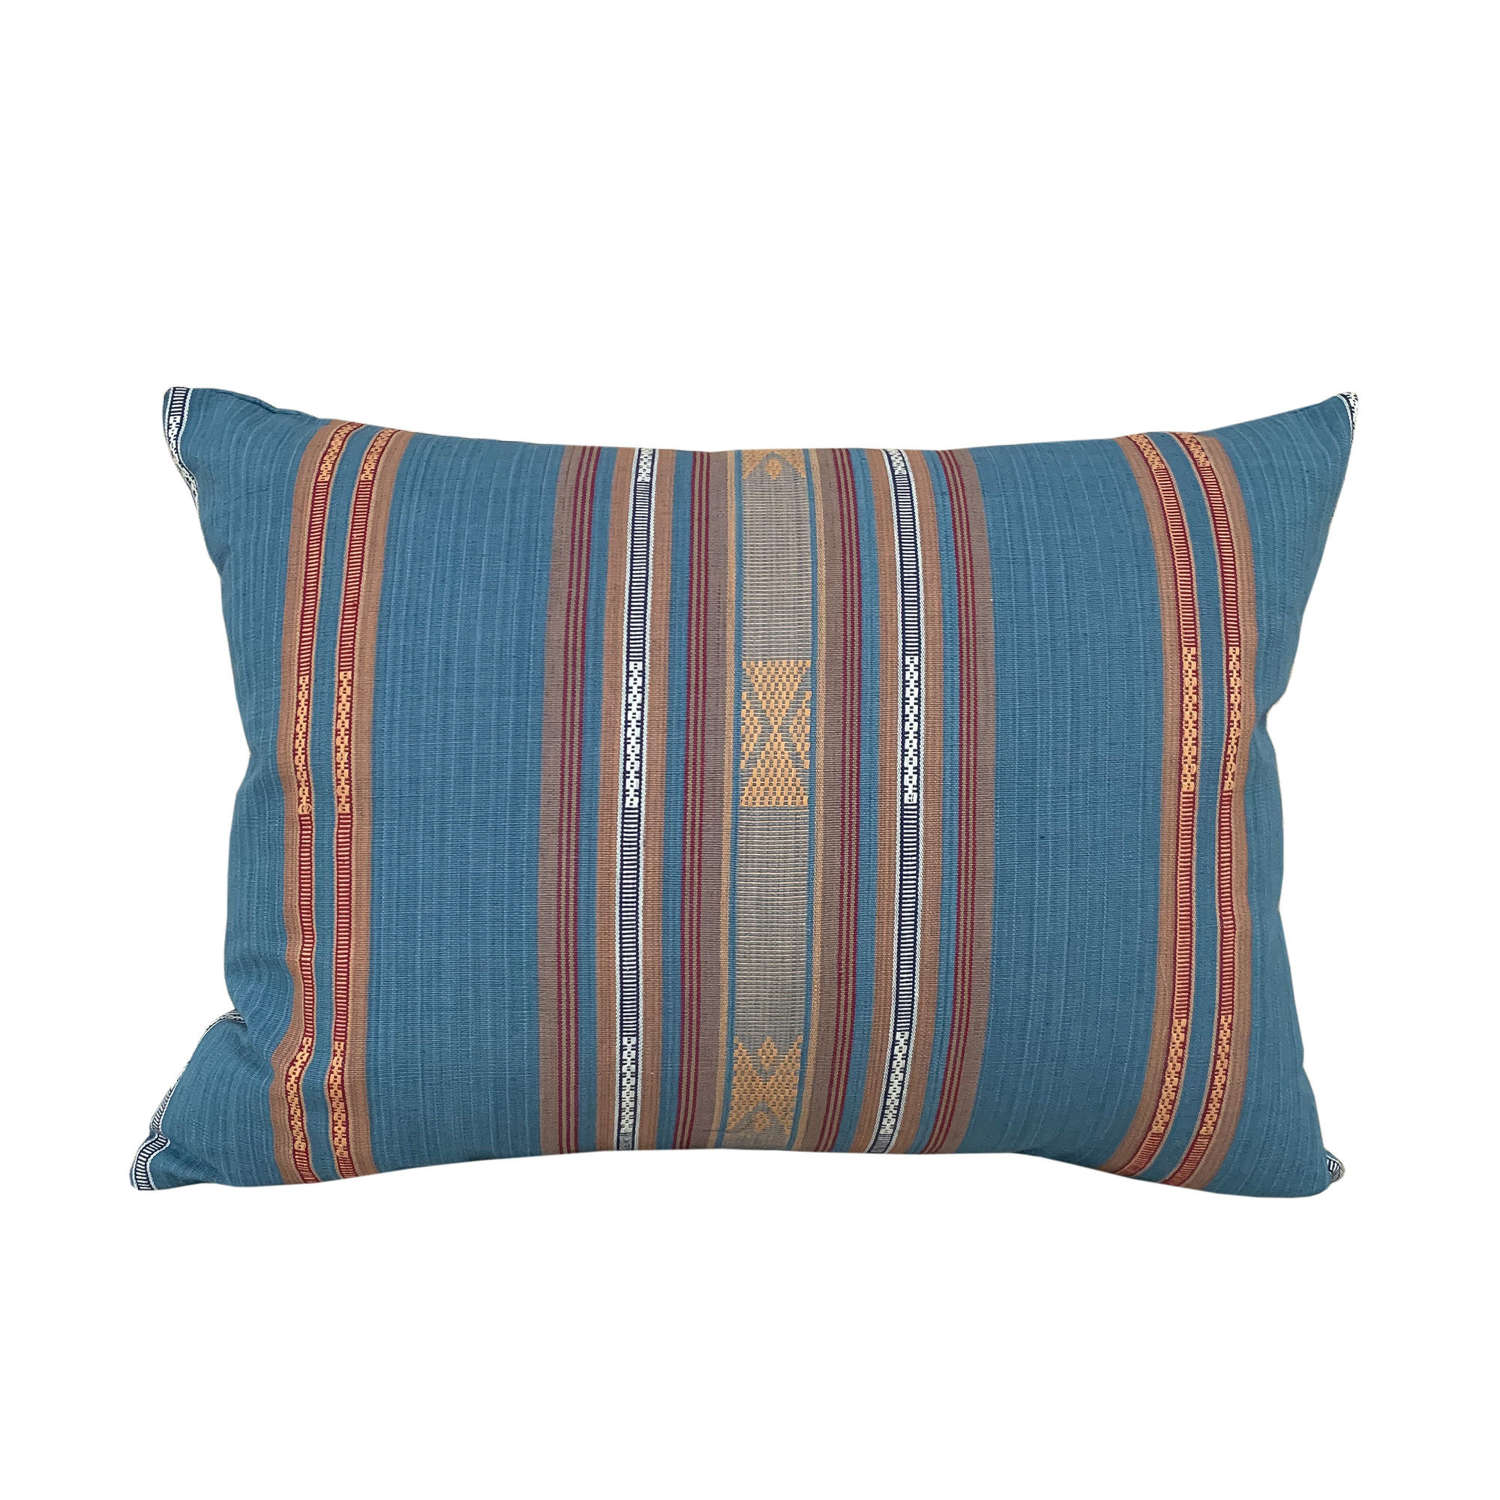 Lombok cushions, light blue